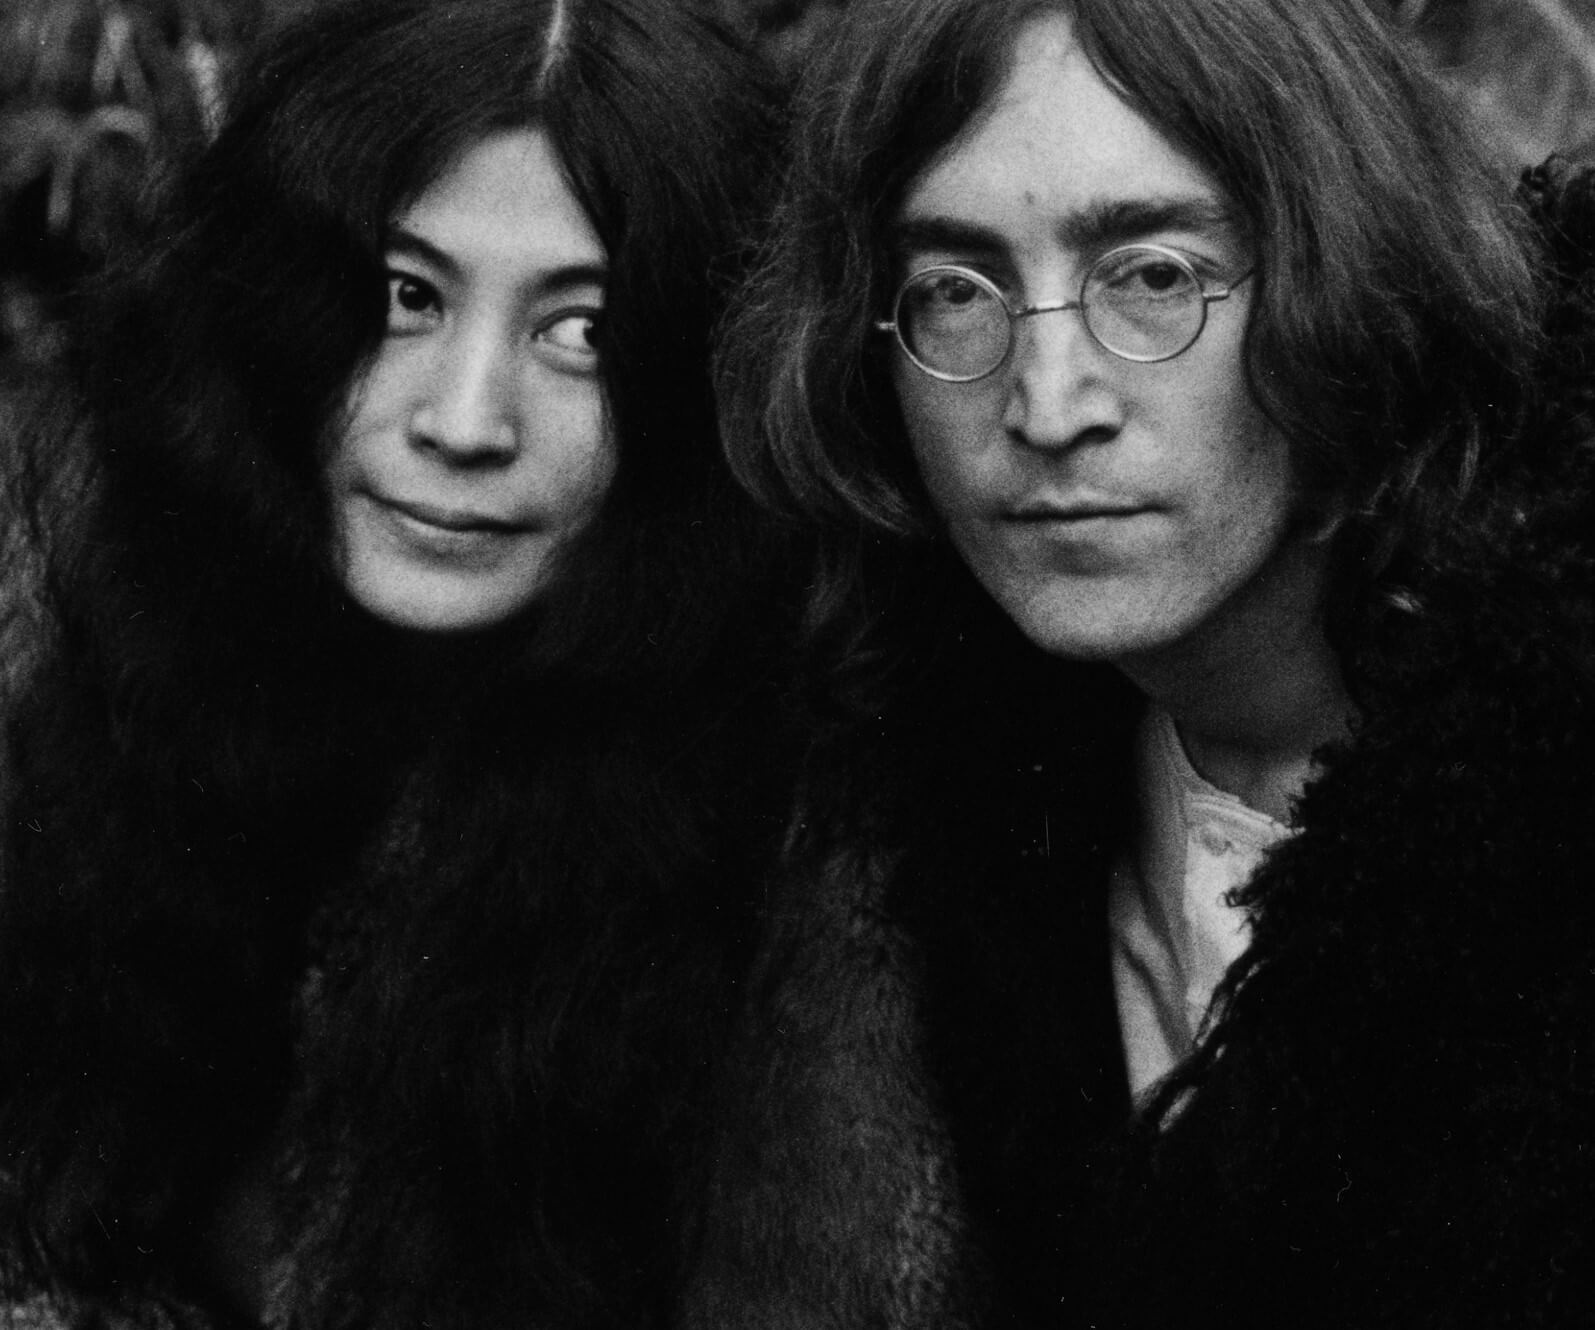 A Journalist Shut Down Rumors John Lennon Didn't Love Yoko Ono